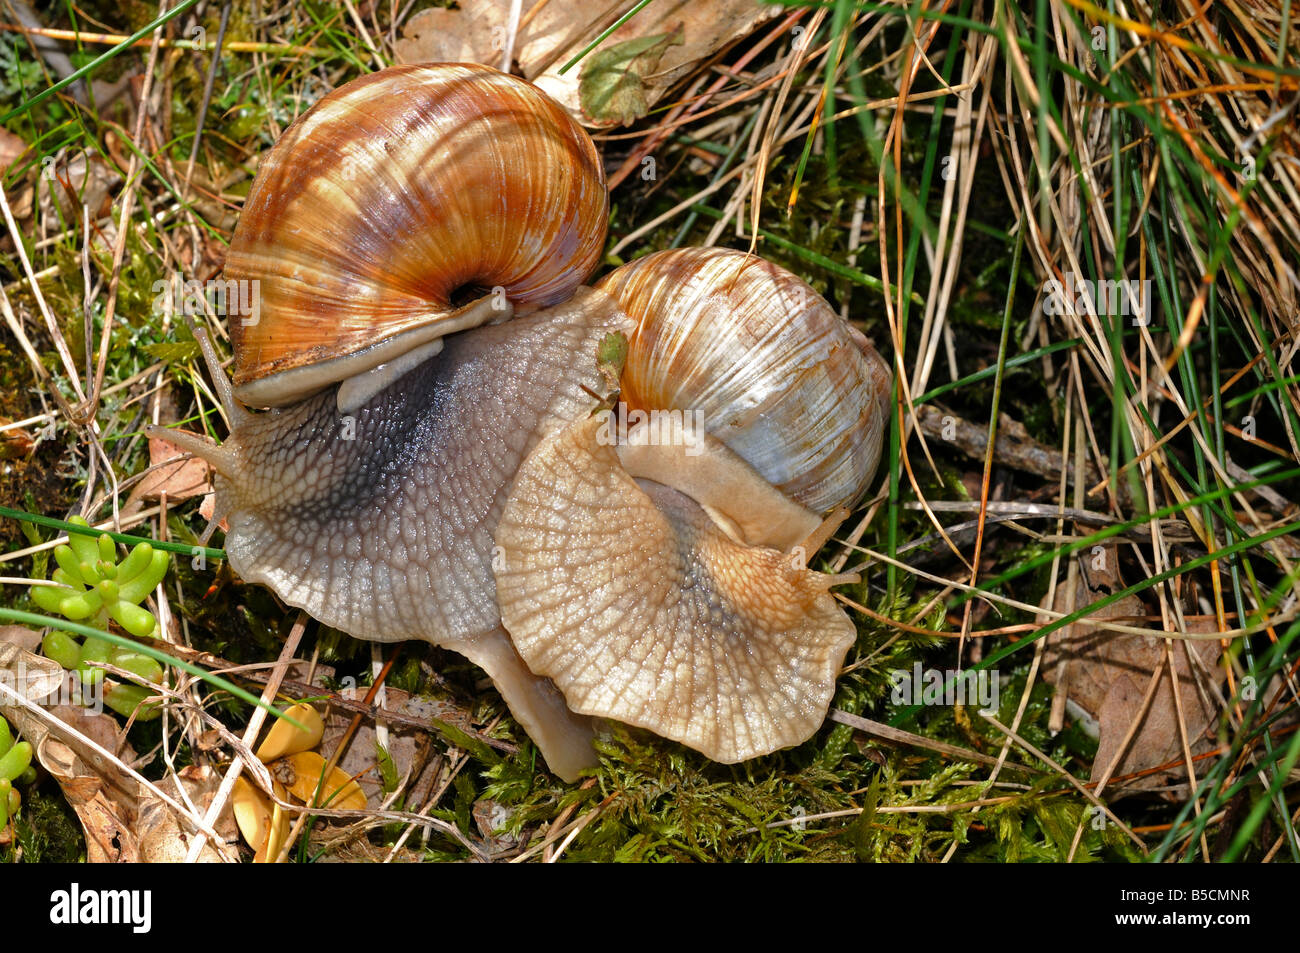 Mating Burgundy Snails, Roman Snails, Helix pomatia Stock Photo